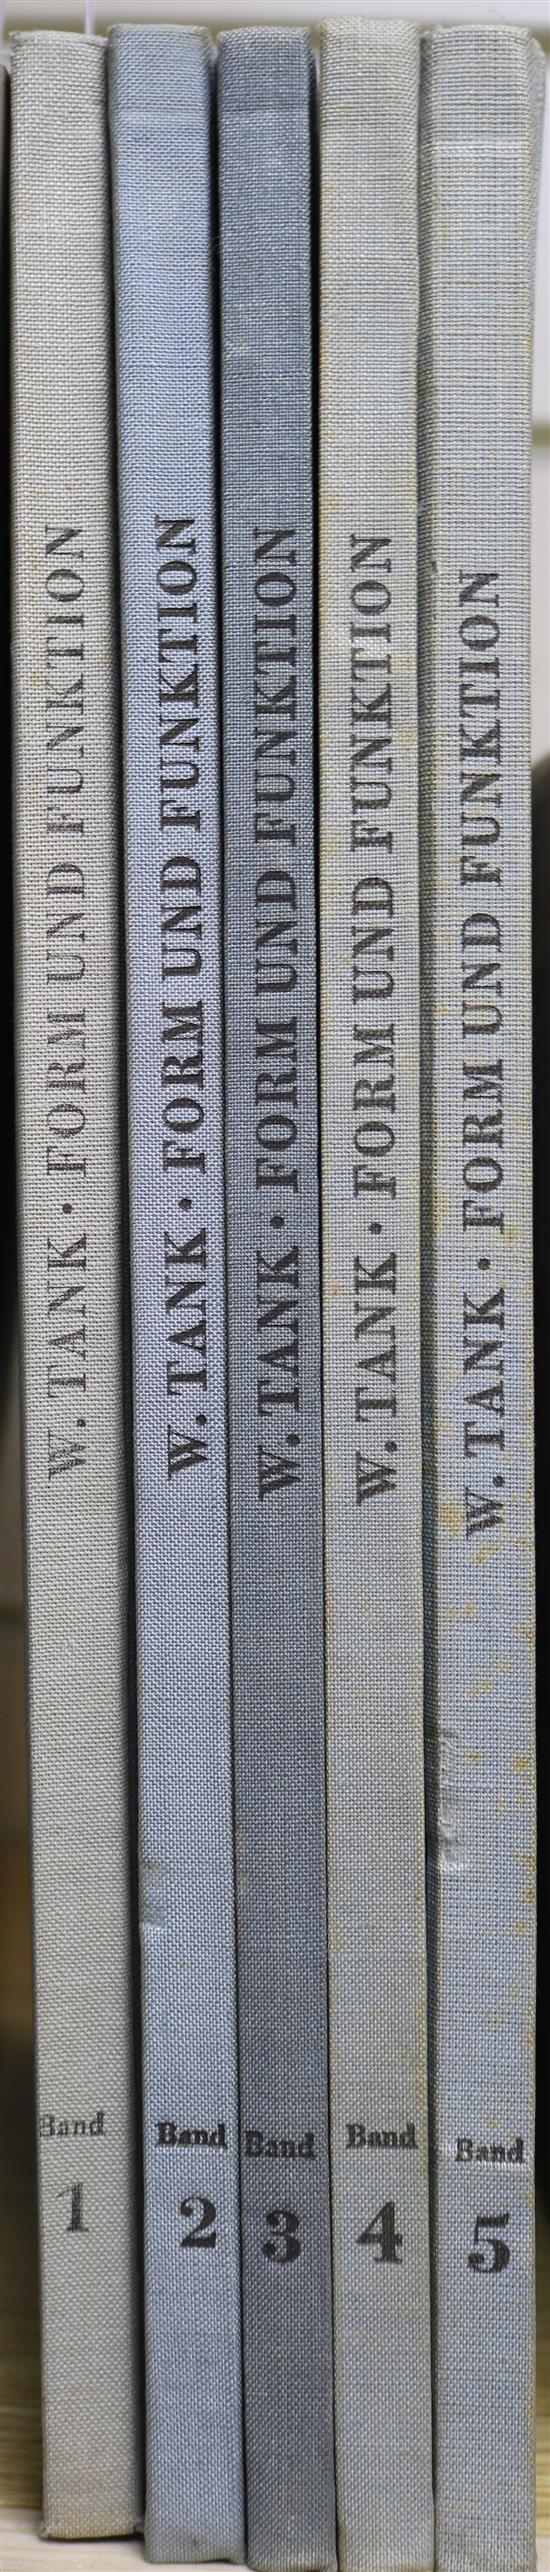 Tank, W. - Form and Funktion, 5 vols, quarto, cloth, Dresden 1953